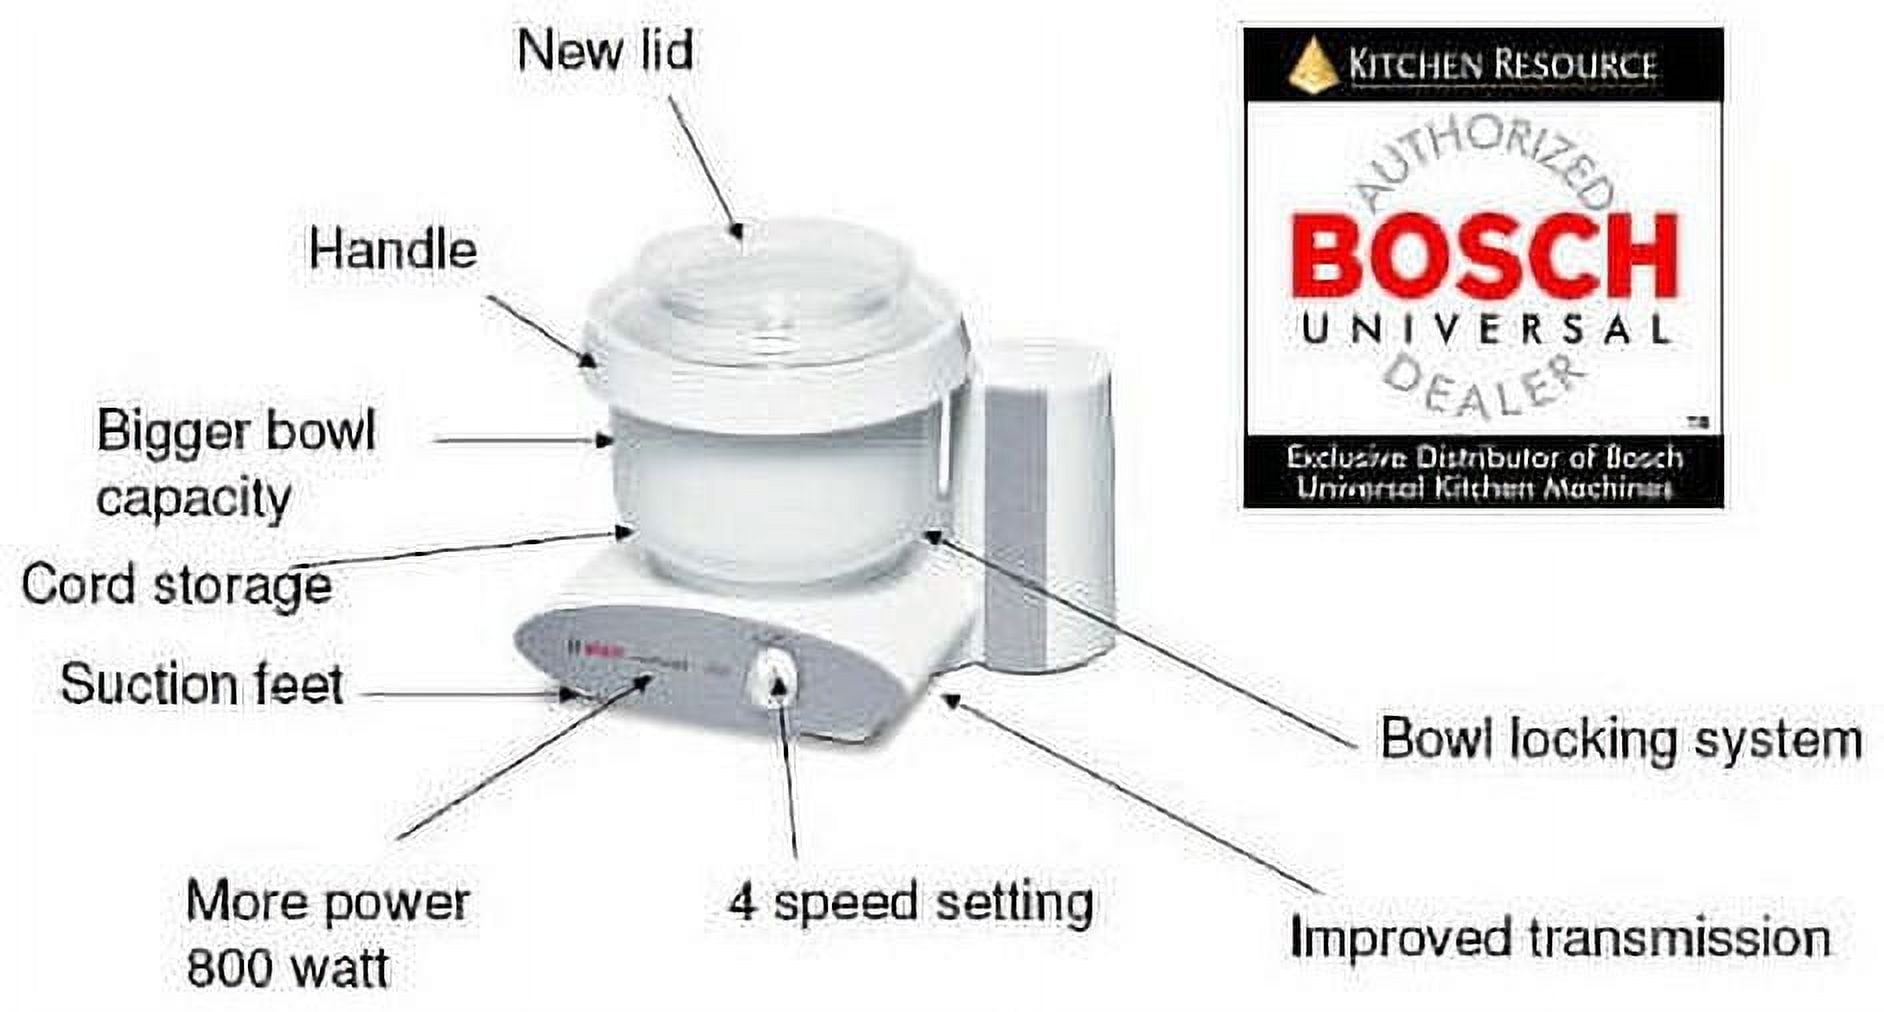 Bosch Mixer Universal Plus